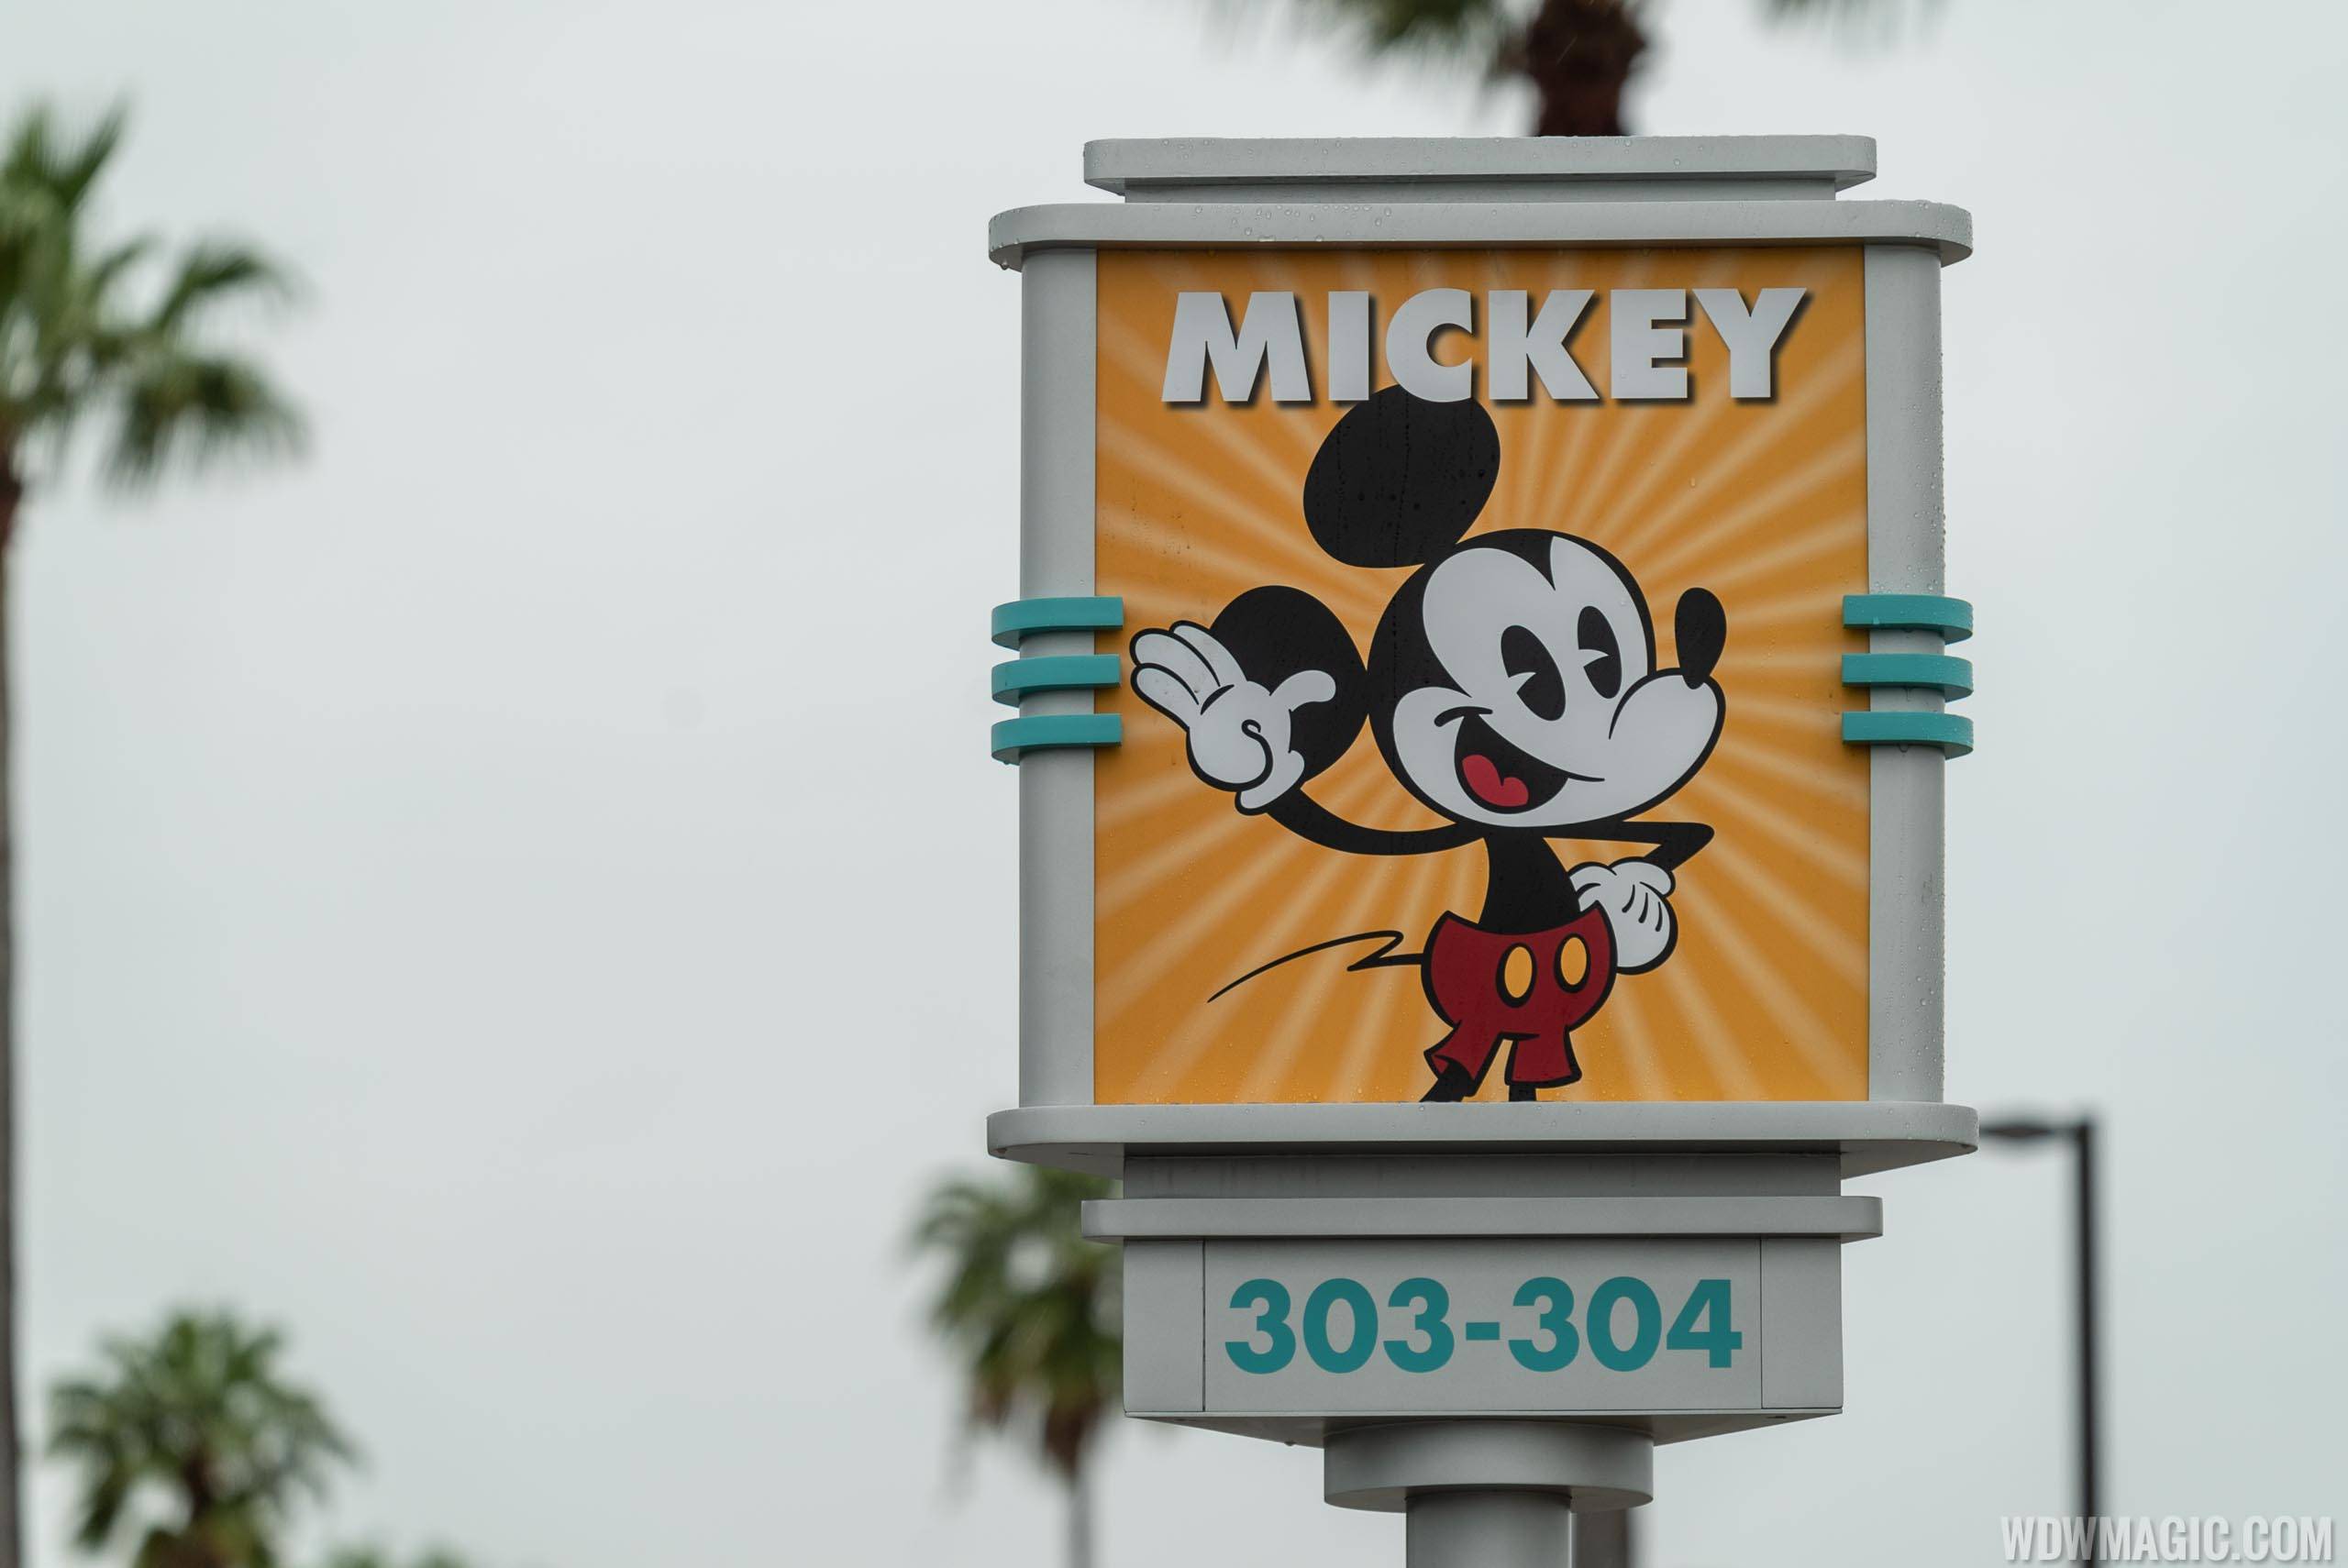 PHOTOS - New parking lot name signs at Disney's Hollywood Studios